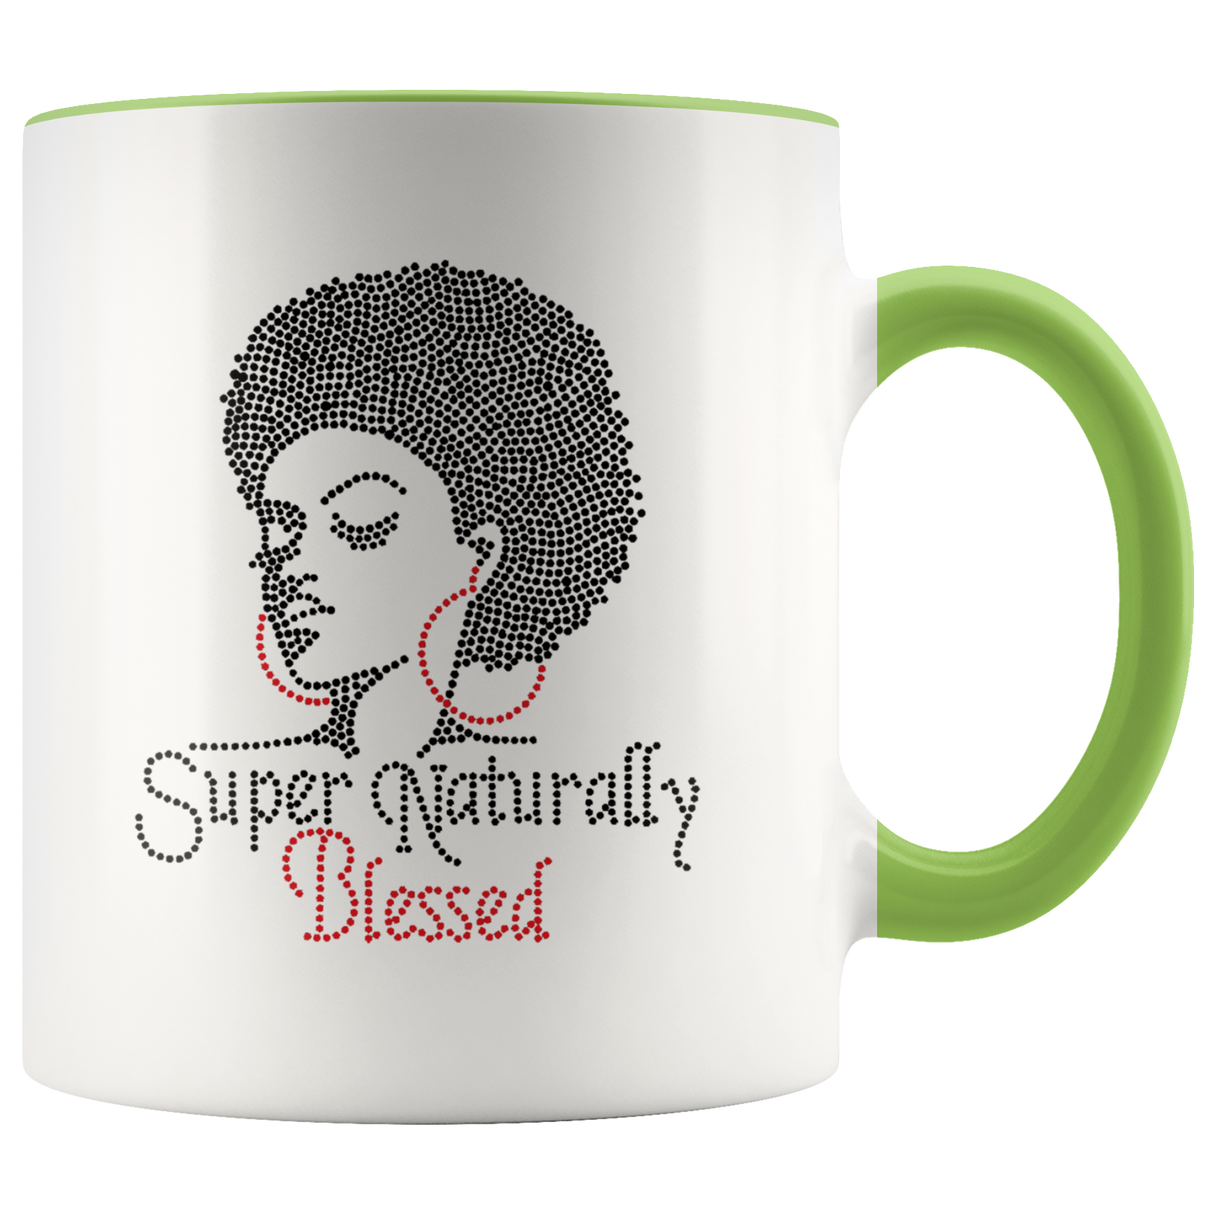 Mug Super Naturally Blessed Ceramic Mug - Green | Shop Sassy Chick